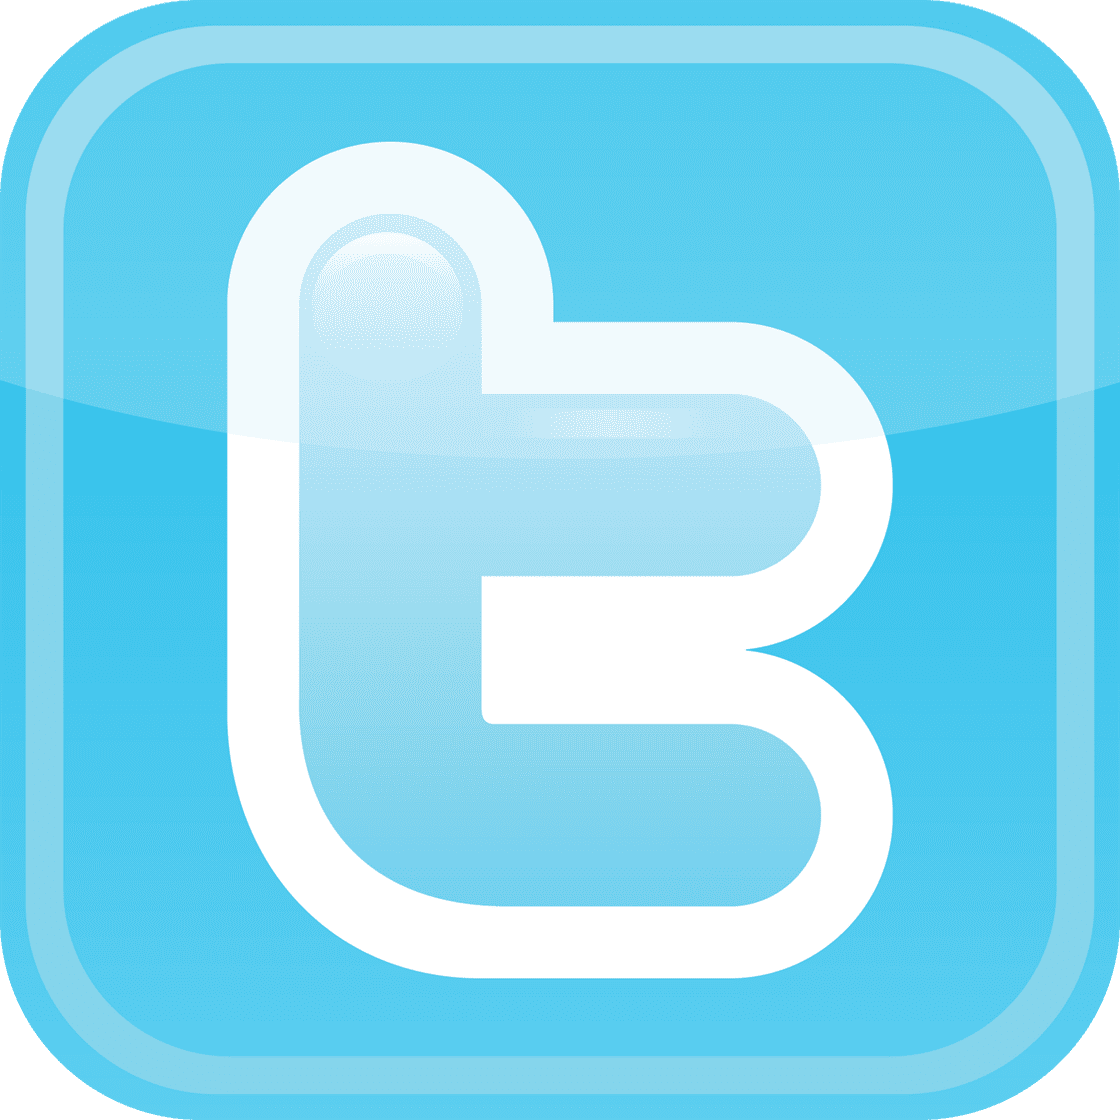 small twitter logo